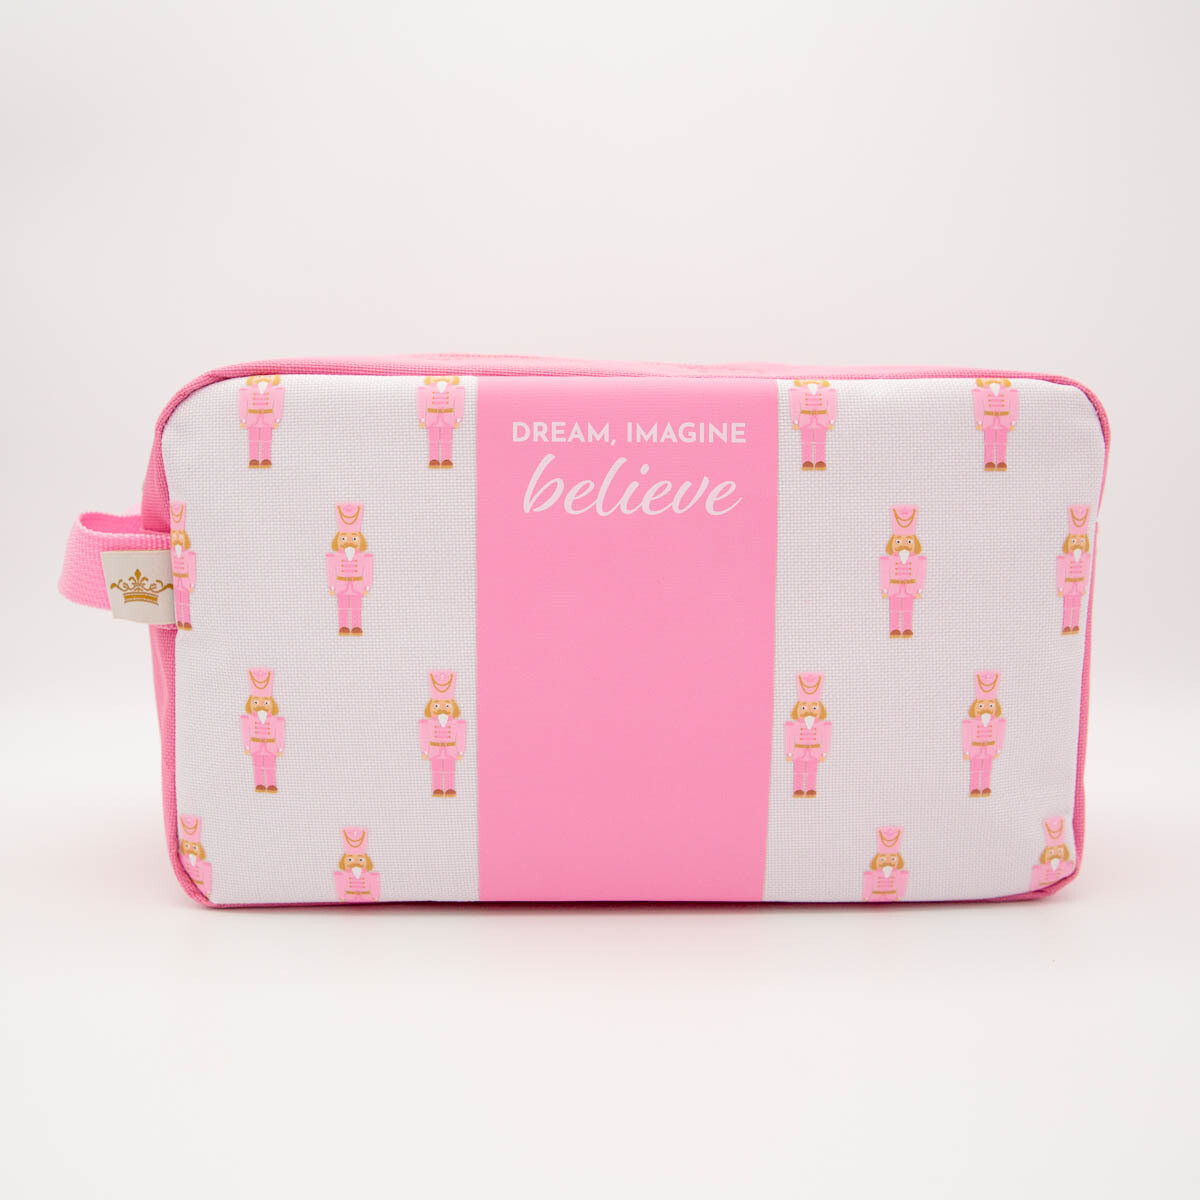 Nutcracker Dream Imagine Believe Cosmetic Bag, Color: Pink/White/Multi